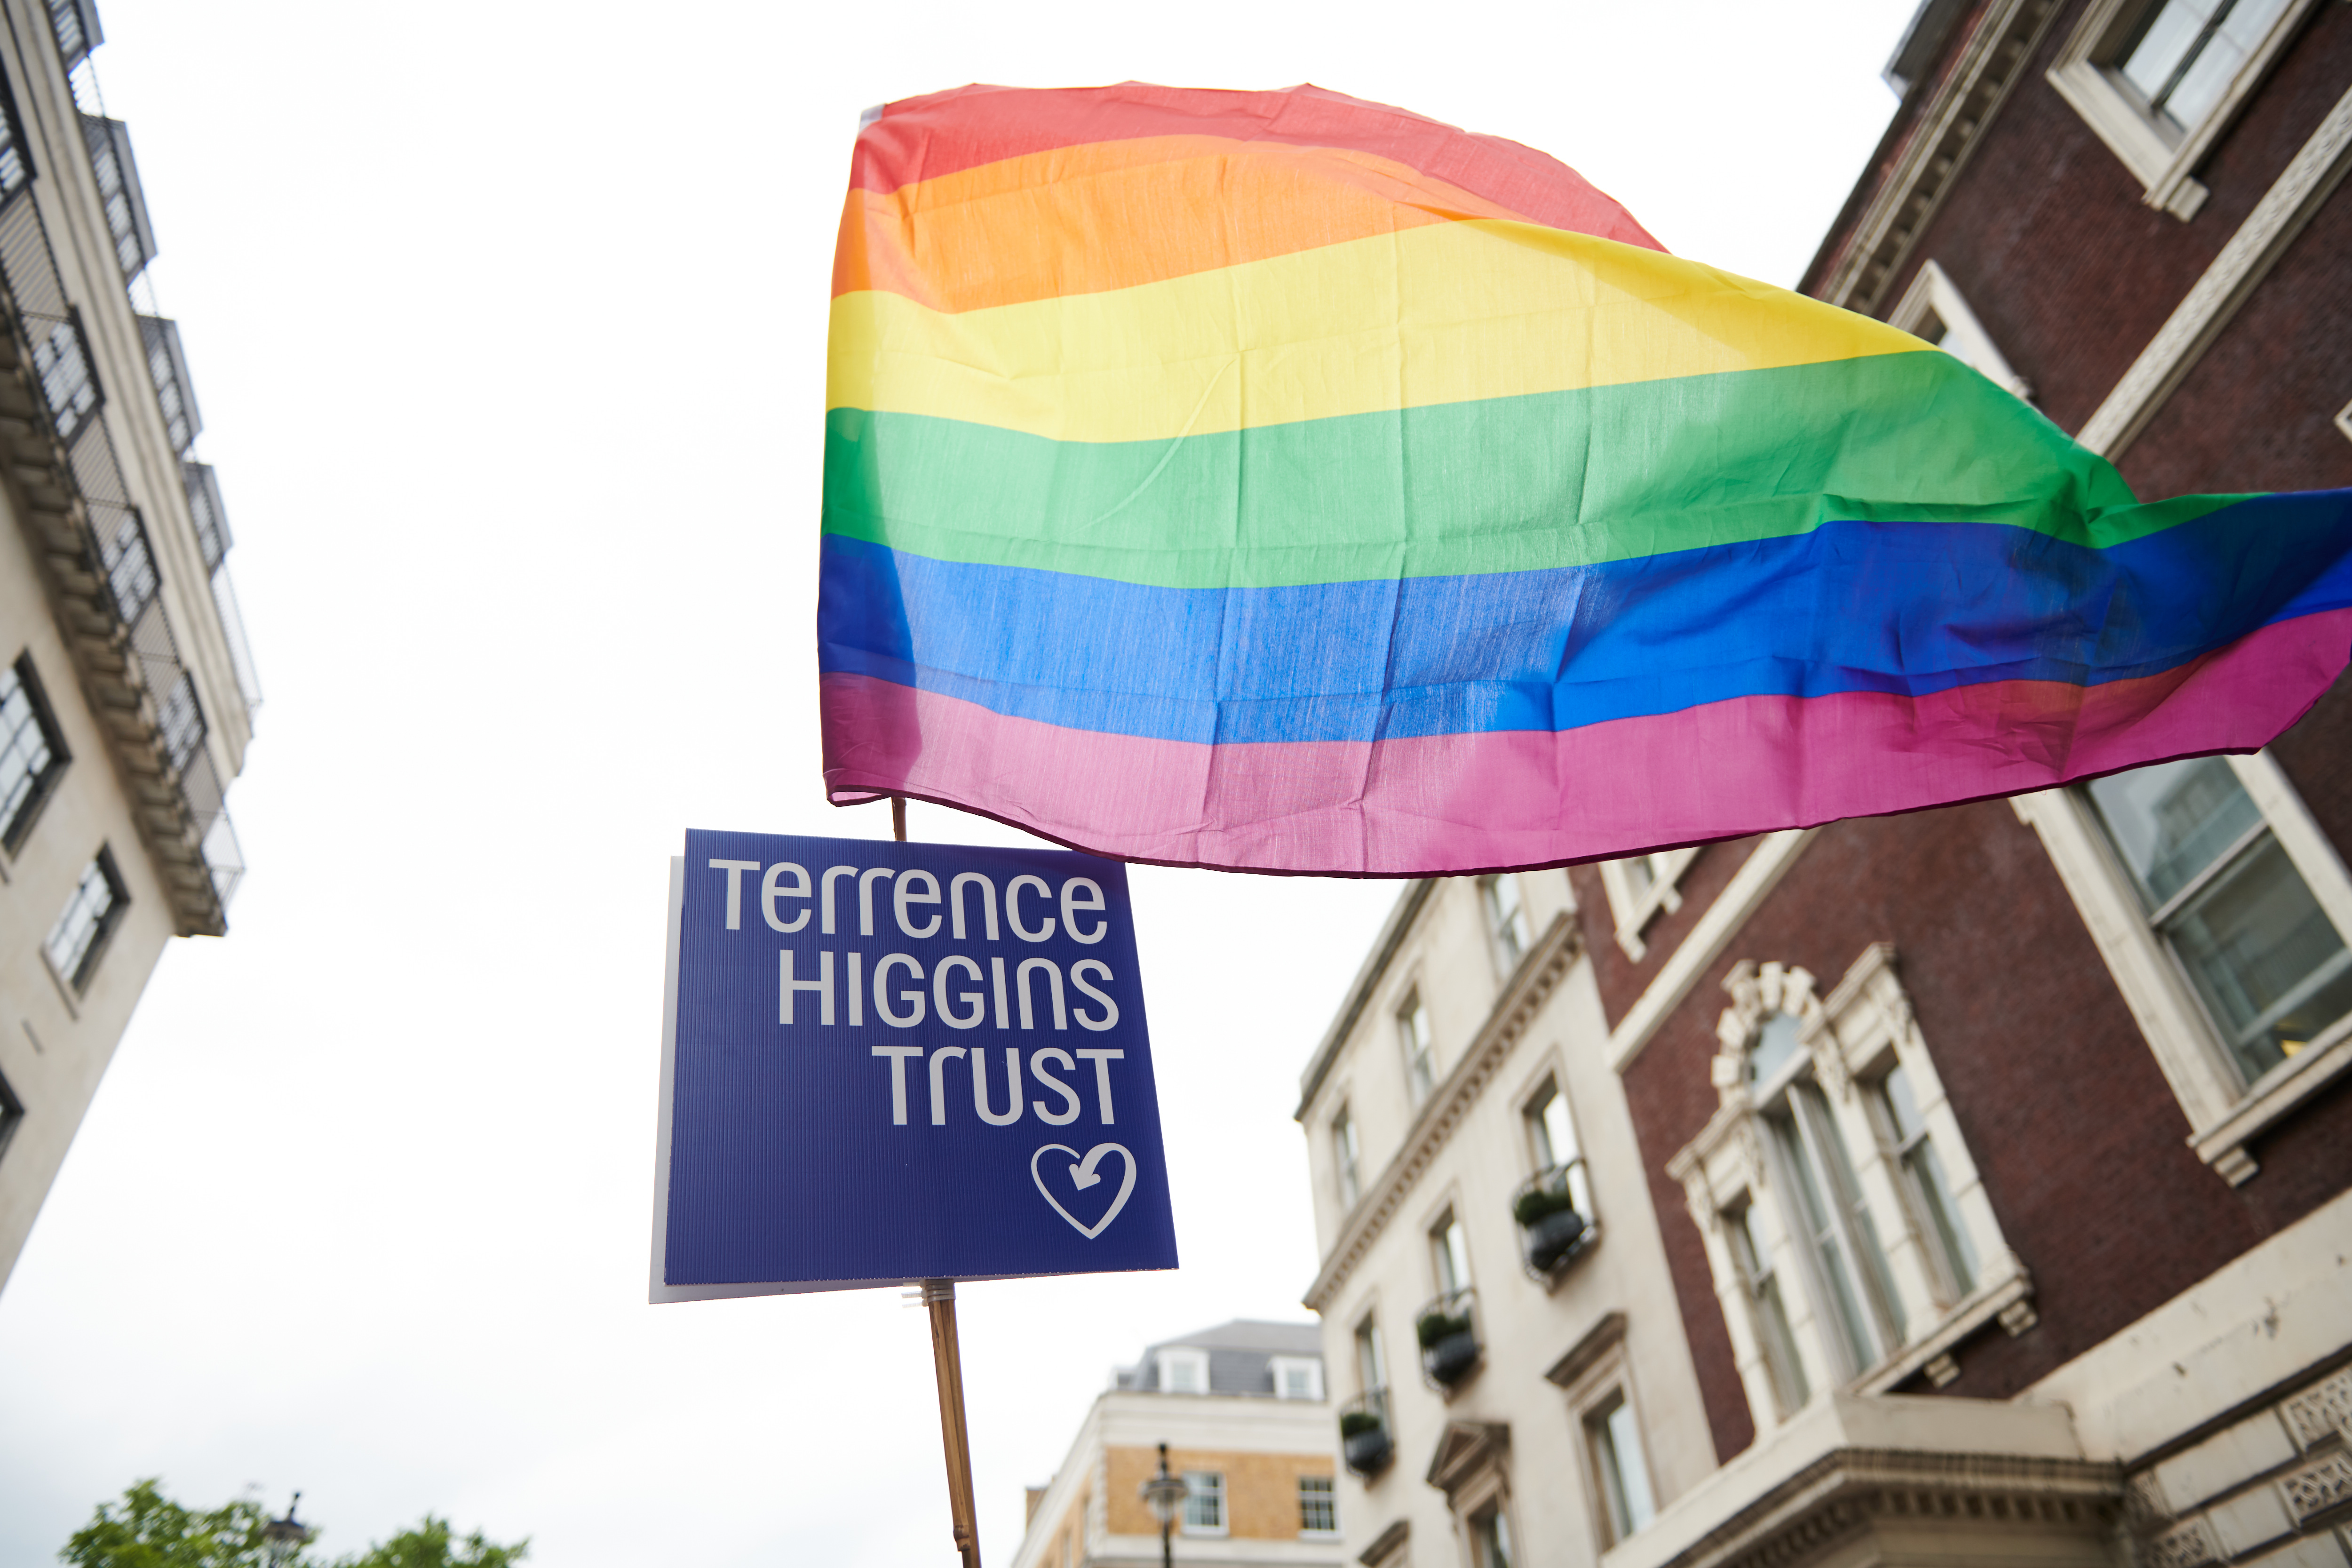 Upshot shot of pride flag and Terrence Higgins Trust logo on a big pole